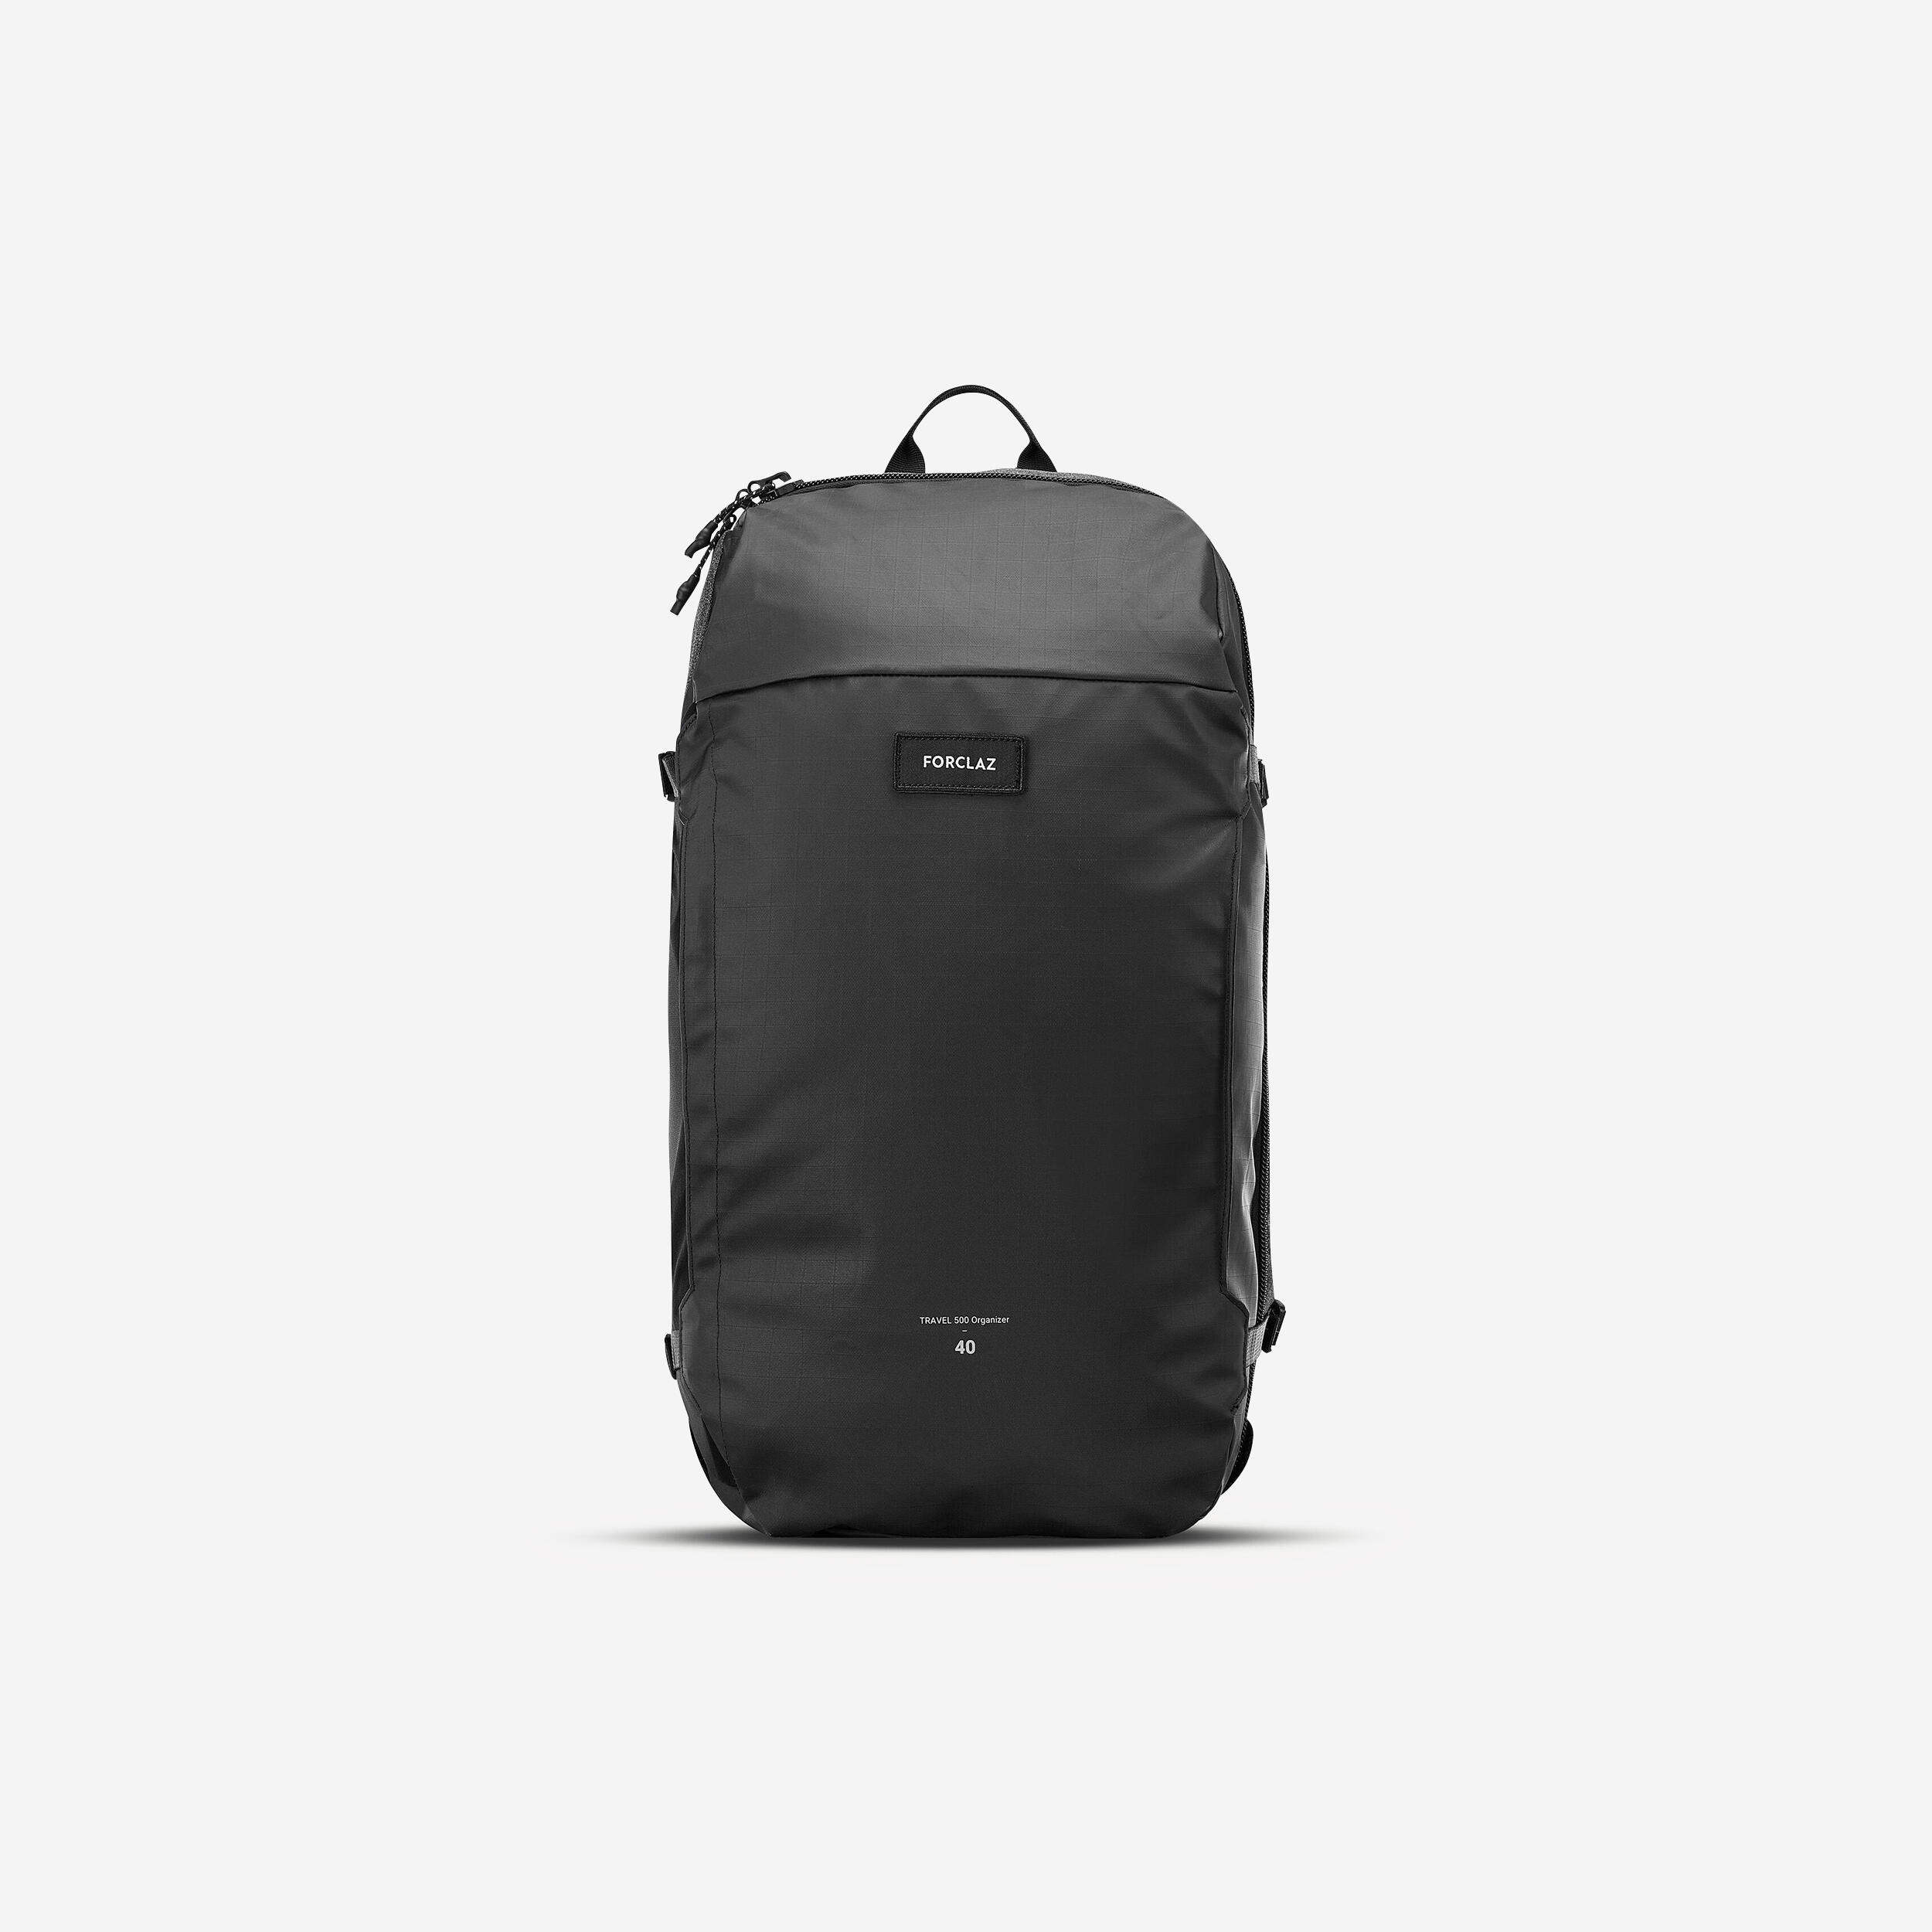 FORCLAZ Travel Backpack 40 L - Travel 500 ORGANIZER Black